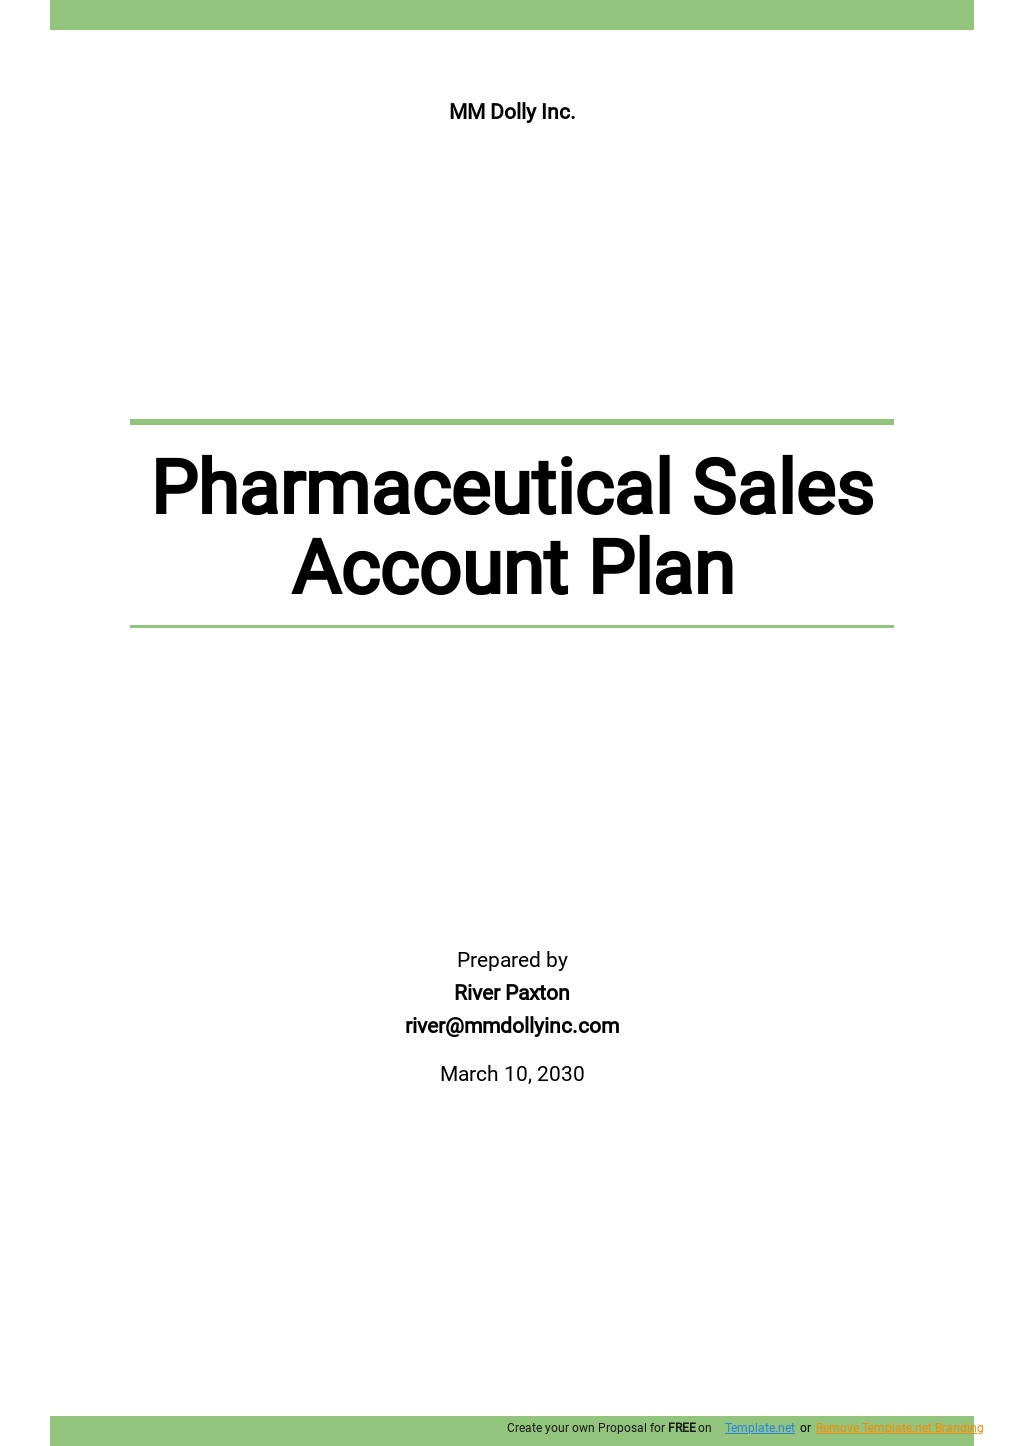 Pharmaceutical Sales Account Plan Template.jpe